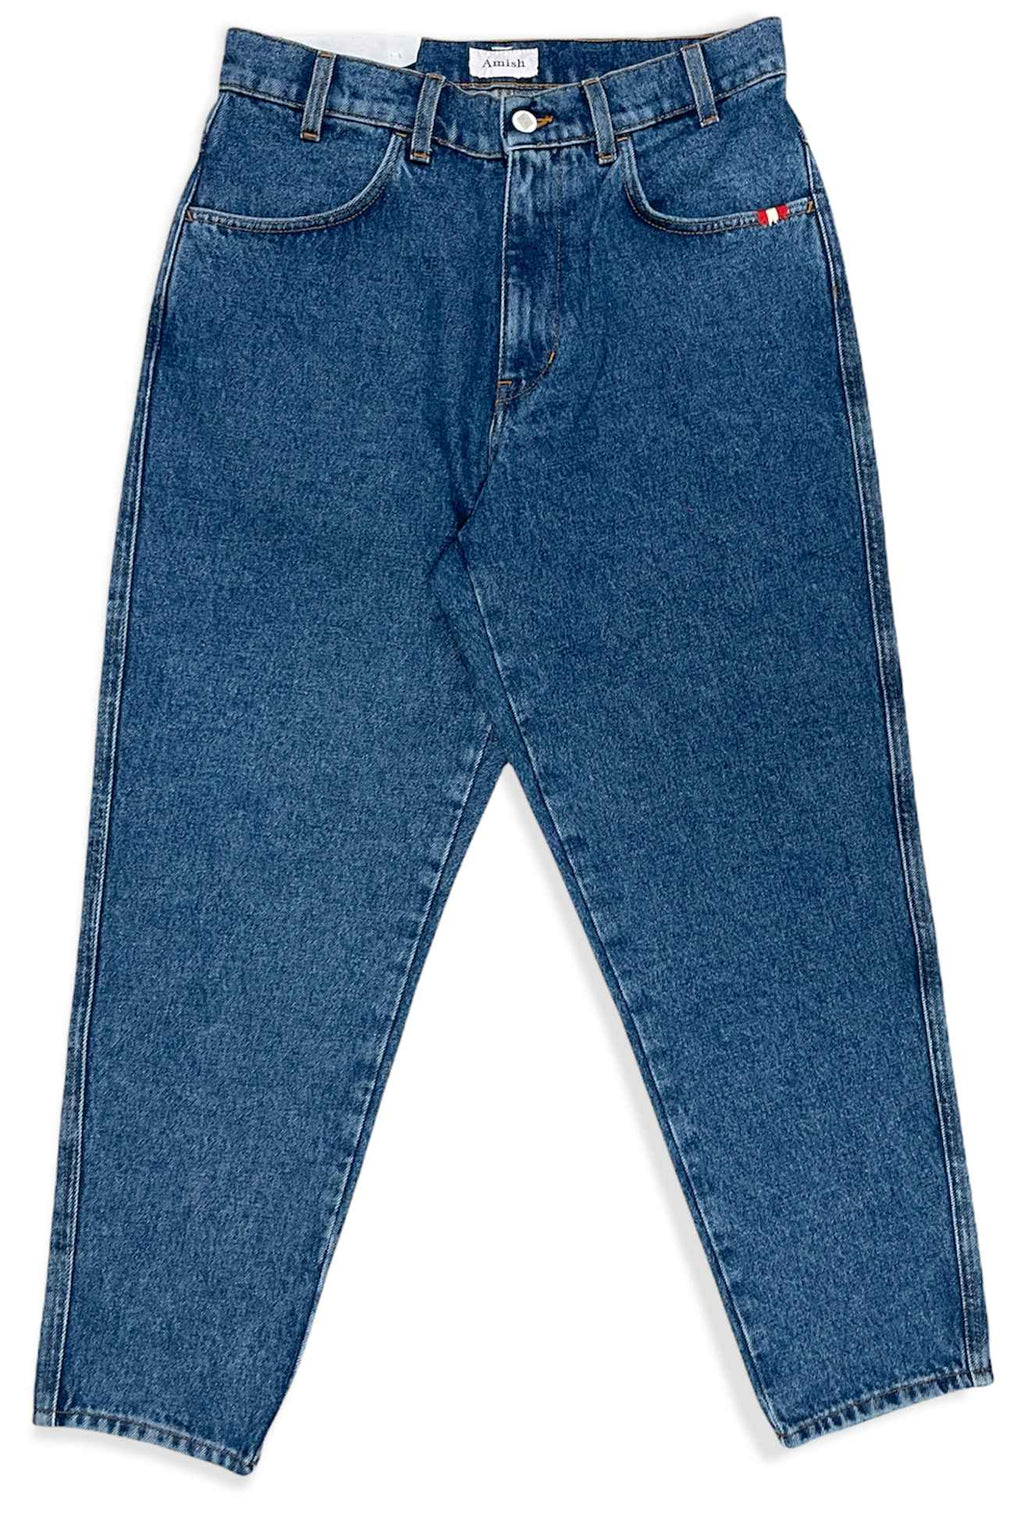  Amish Pantaloni Jeans Bernie Denim Stone Wash Blu Uomo - 1